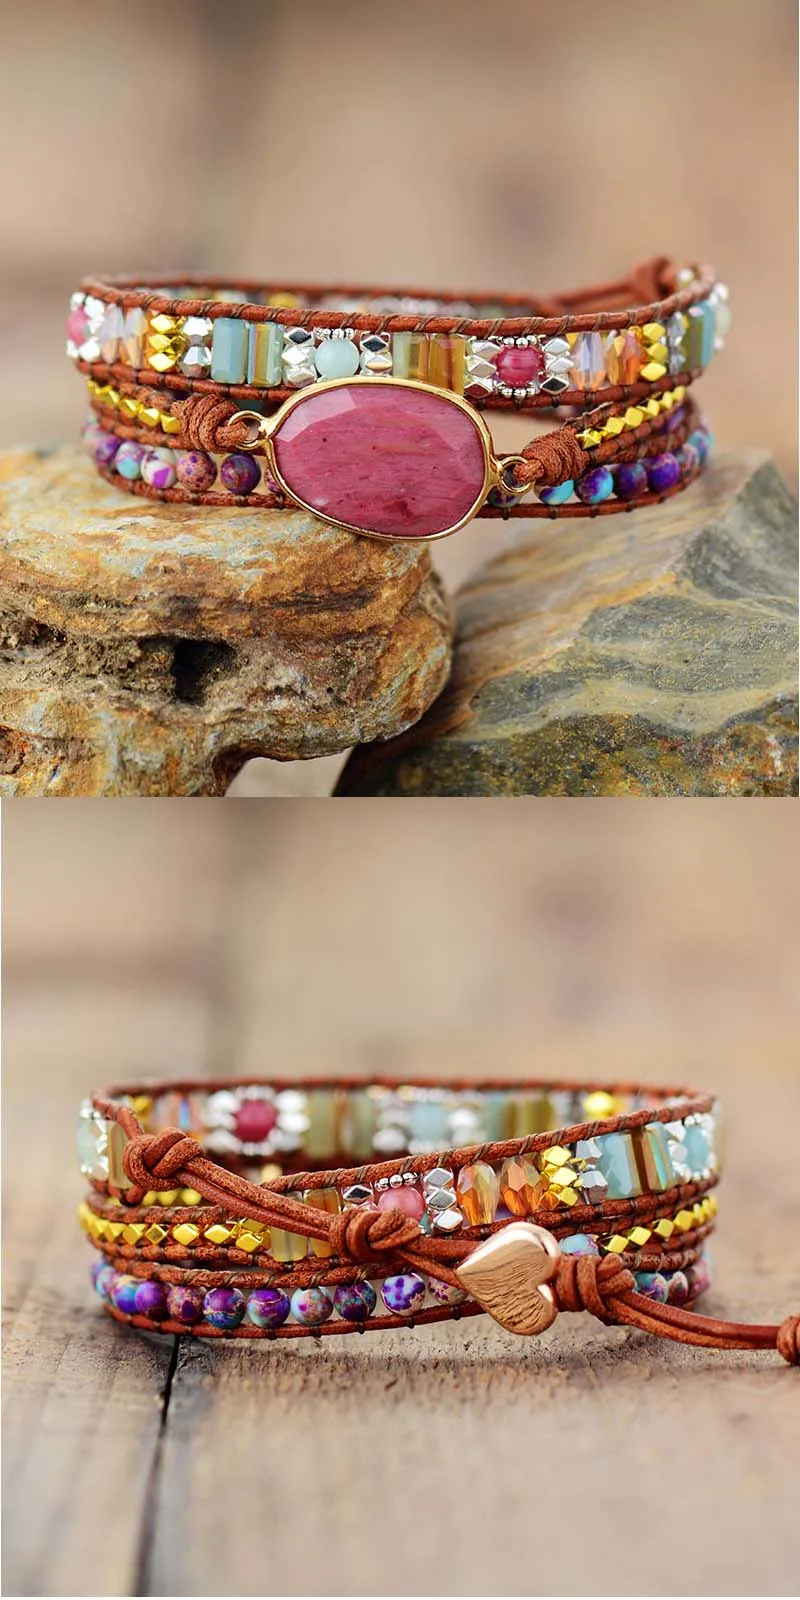 Leather Wrap Bracelet W/ Stones Multi Color Natural Beads 